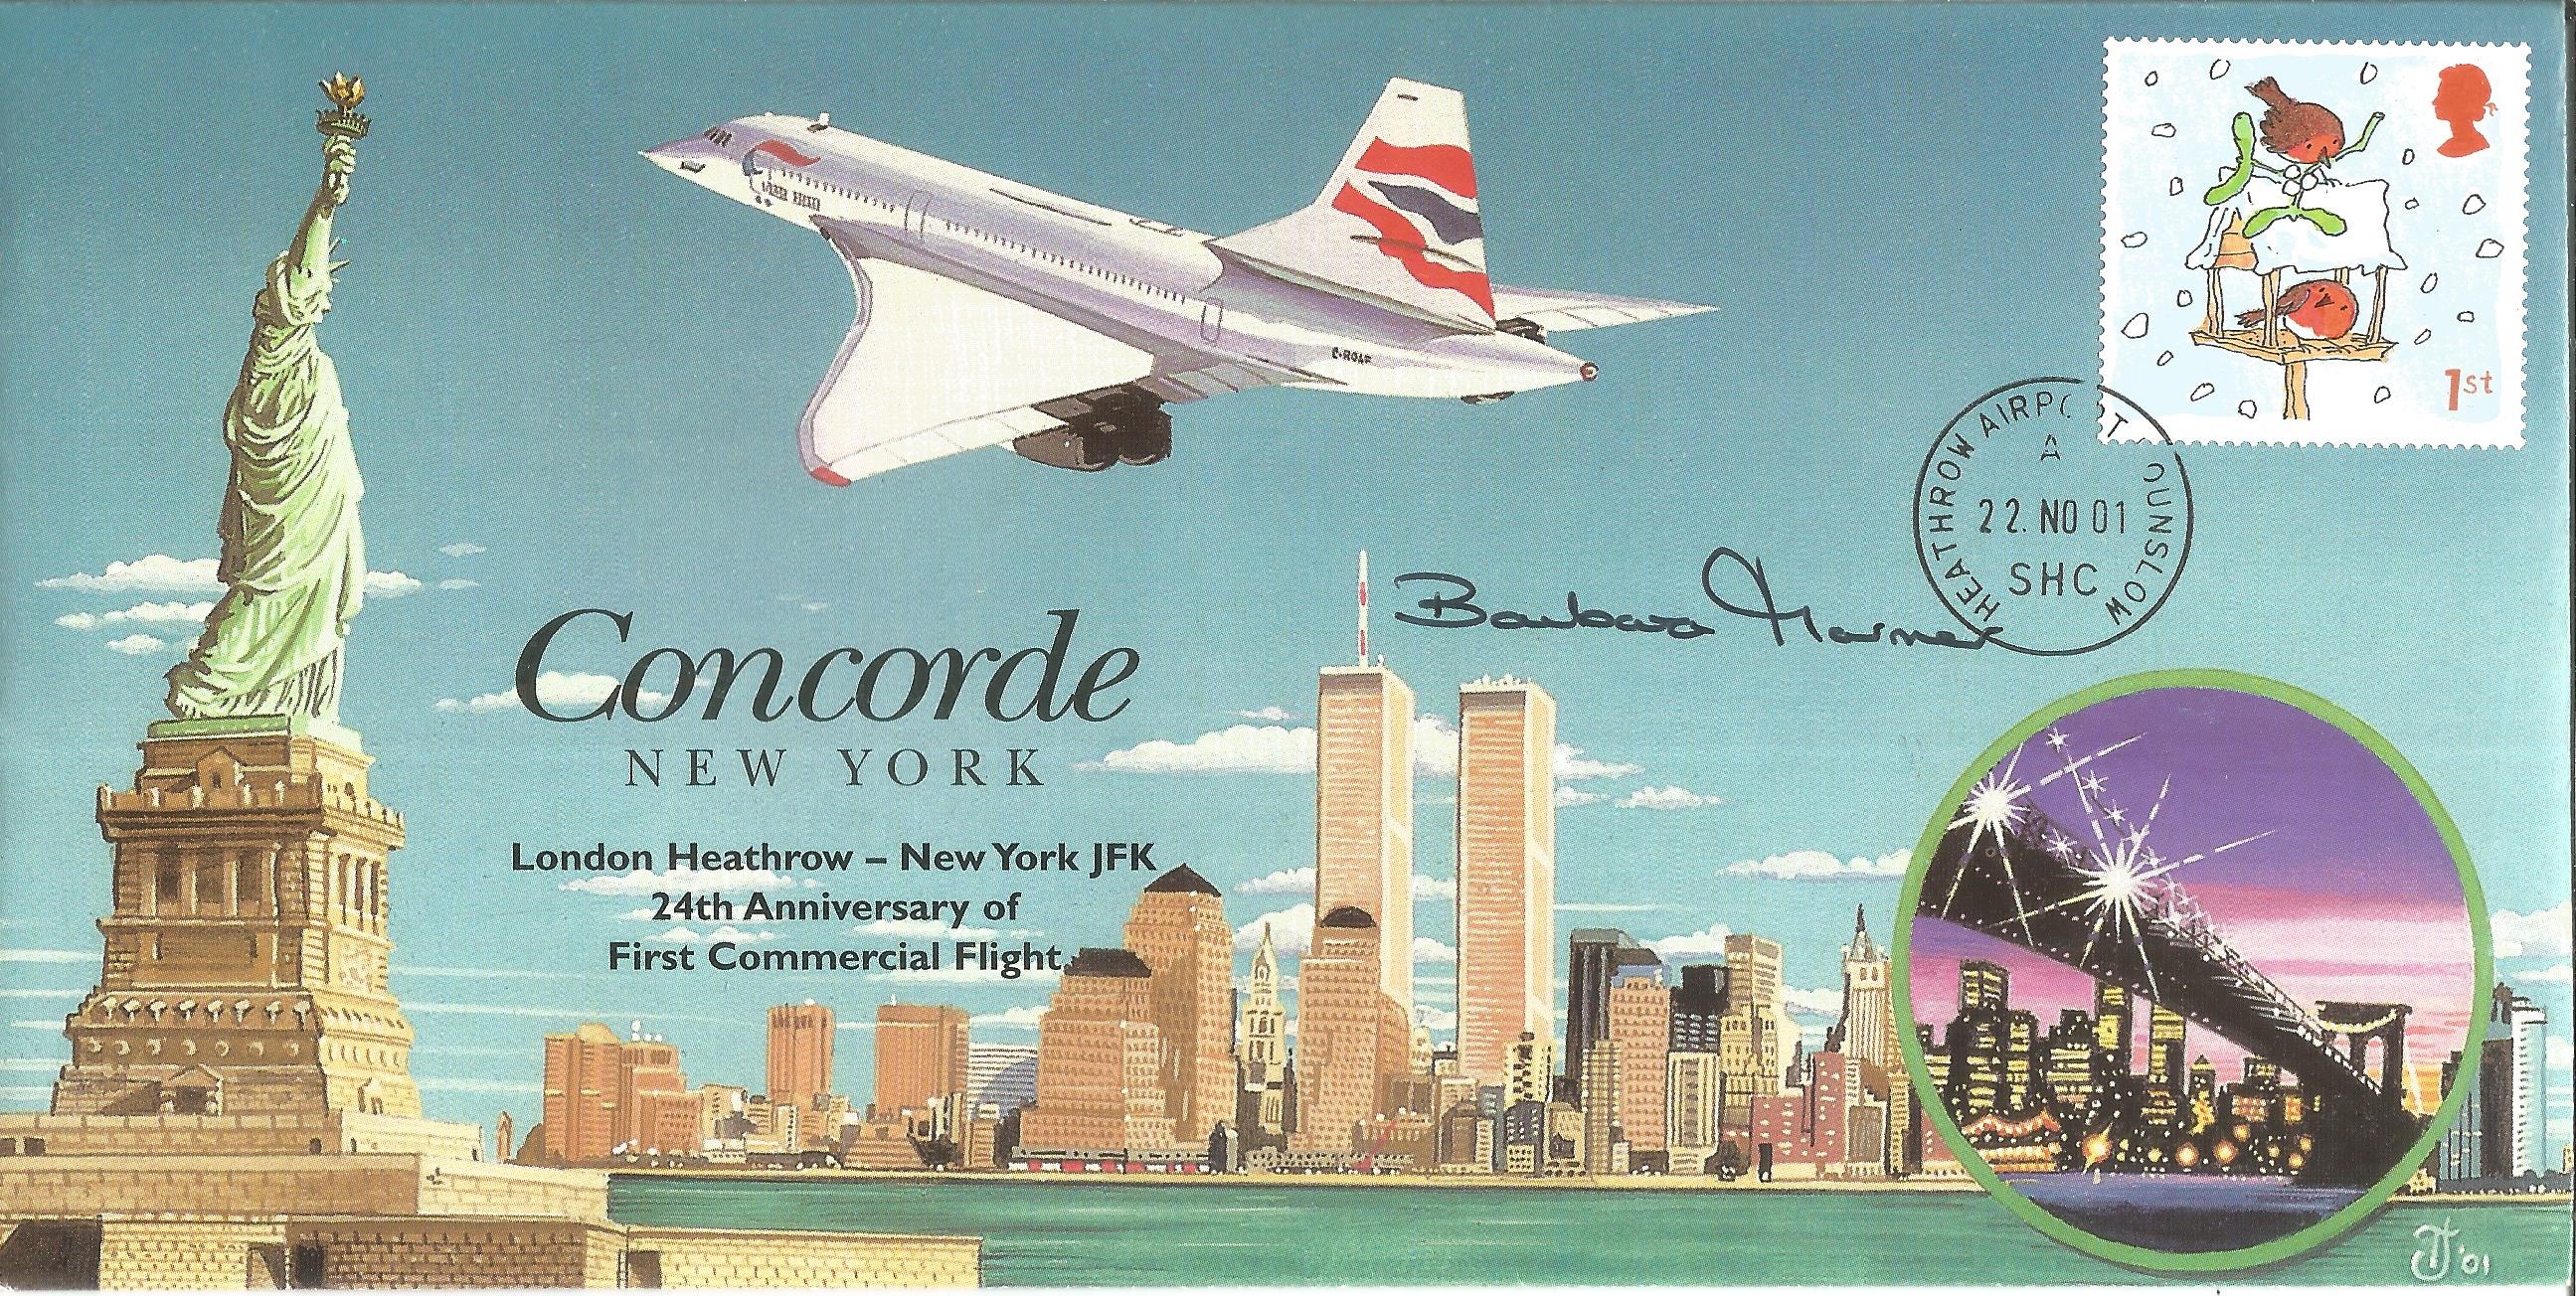 2021 Rare Concorde Cover Signed by Barbara Harmer Concorde Female Pilot flown 22 No 01 Heathrow